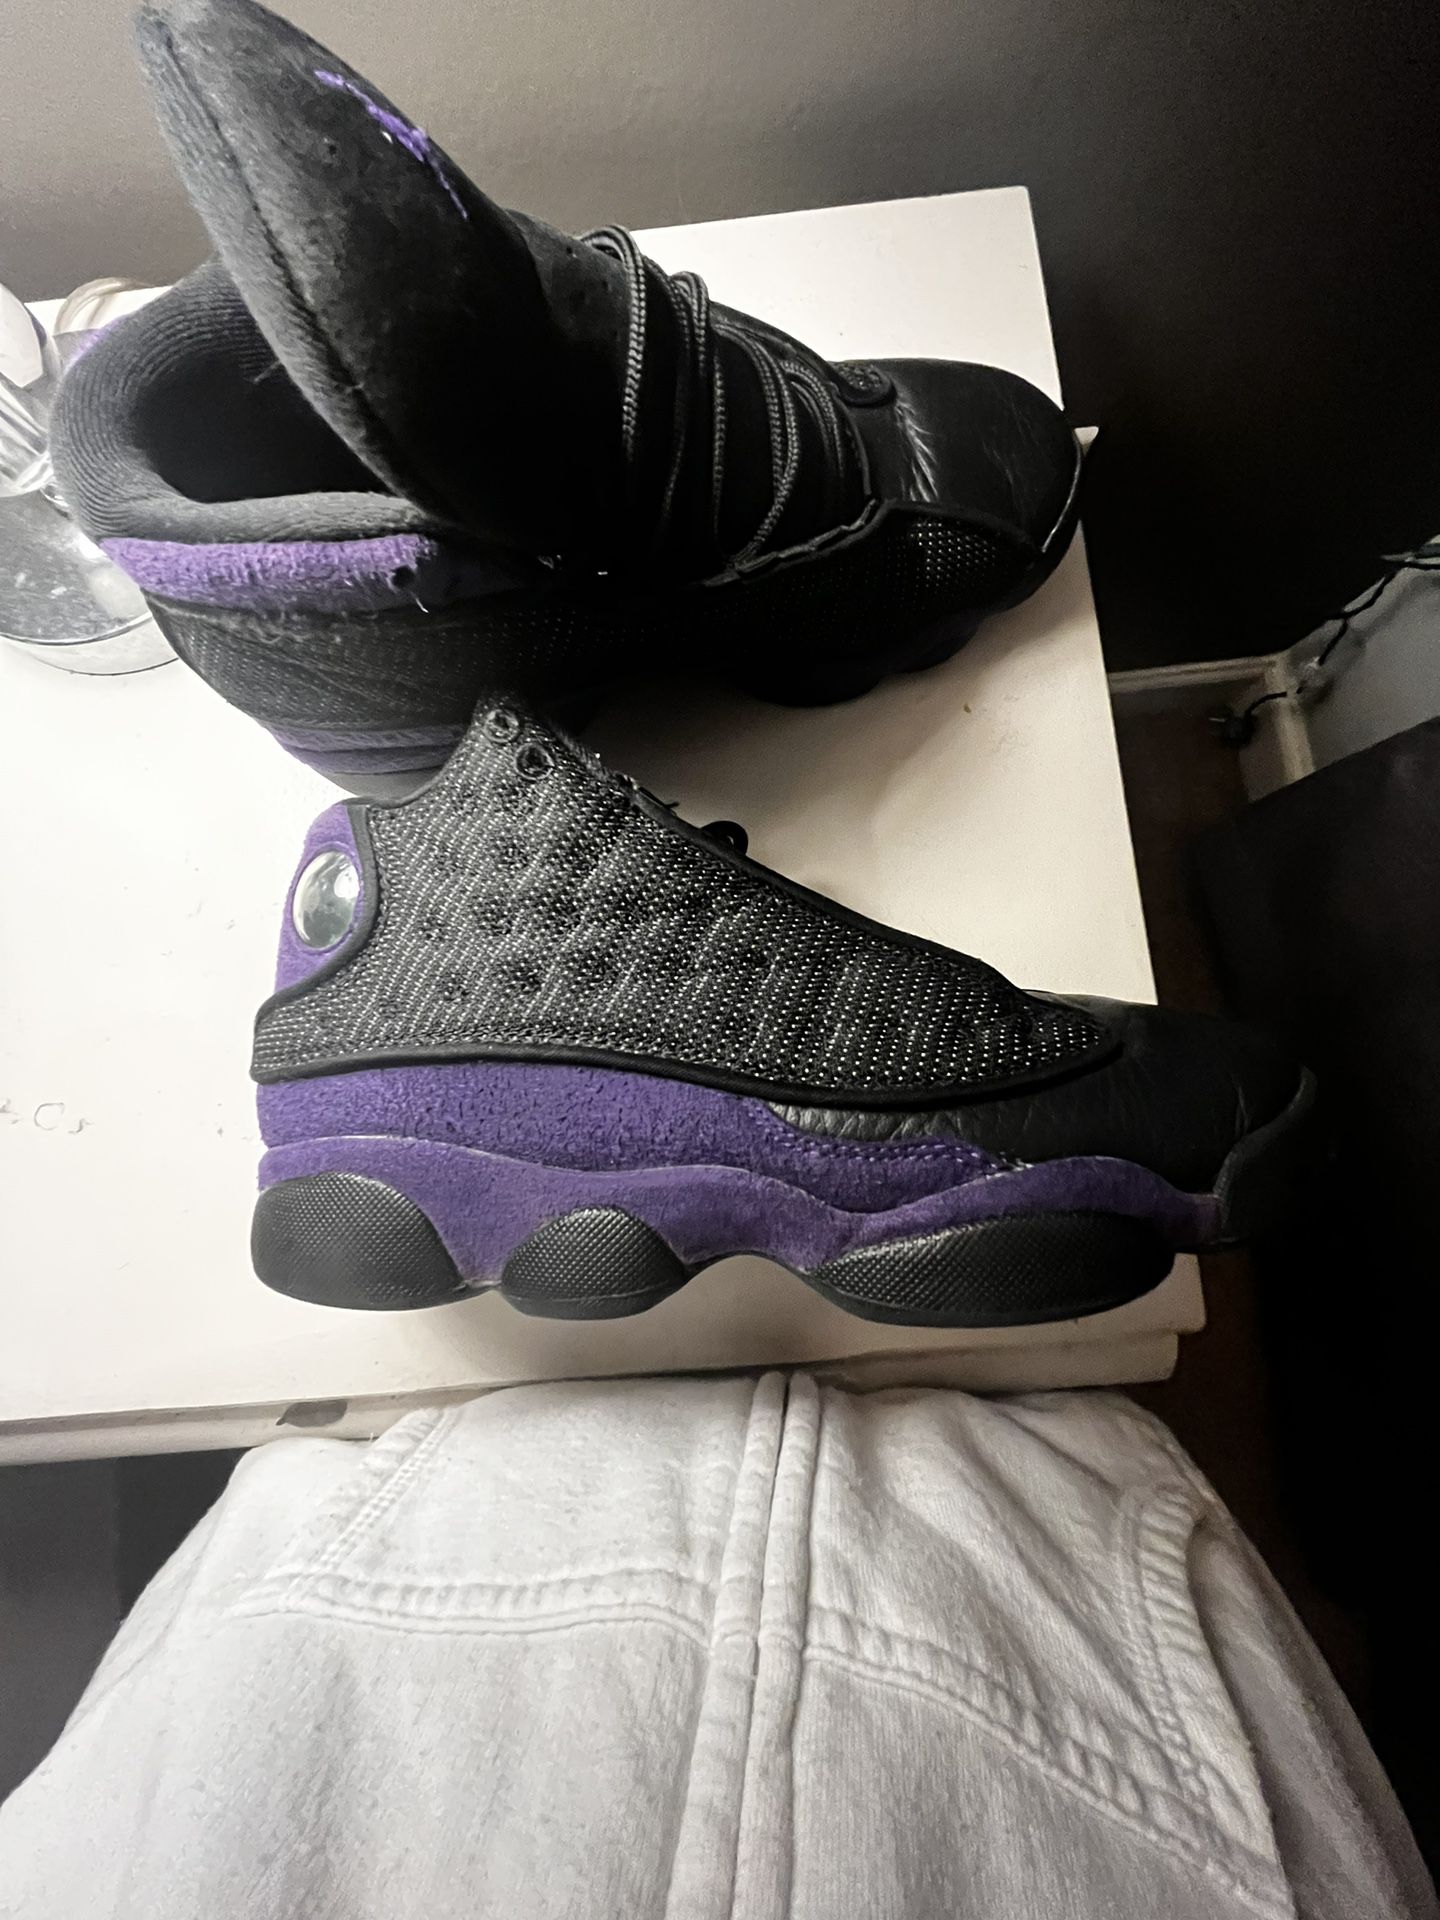 Jordan 13 “court purple”  6Y